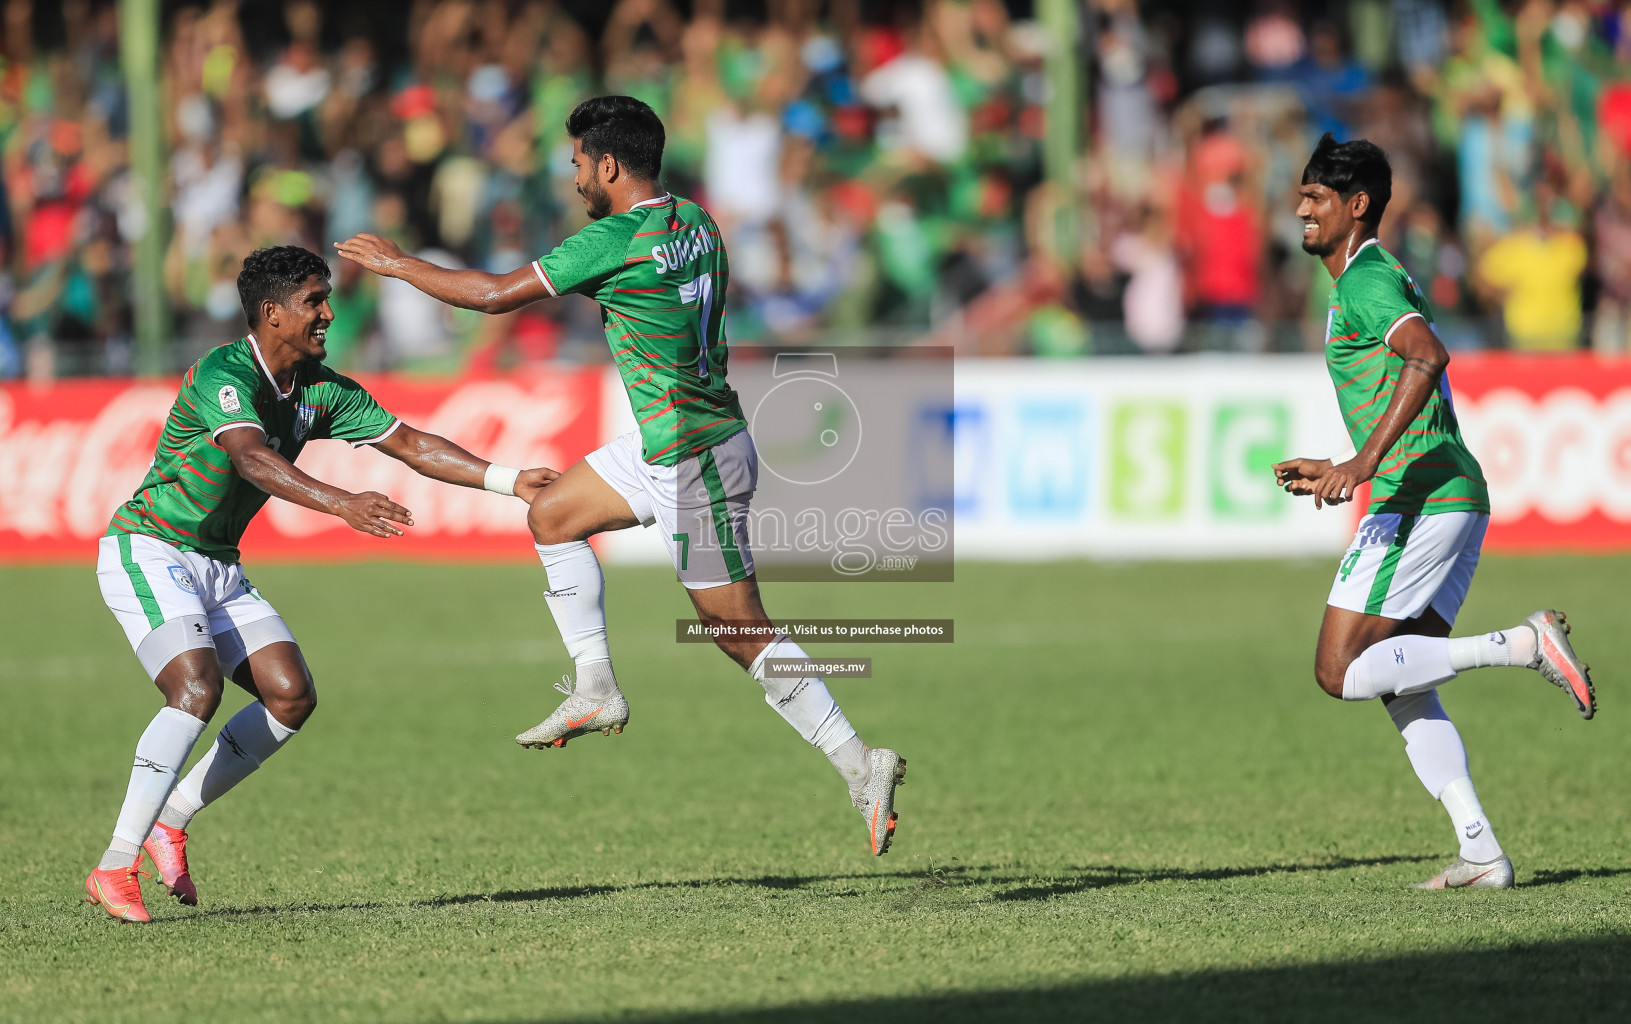 Bangladesh vs Nepal in SAFF Championship 2021 held on 13th October 2021 in Galolhu National Stadium, Male', Maldives